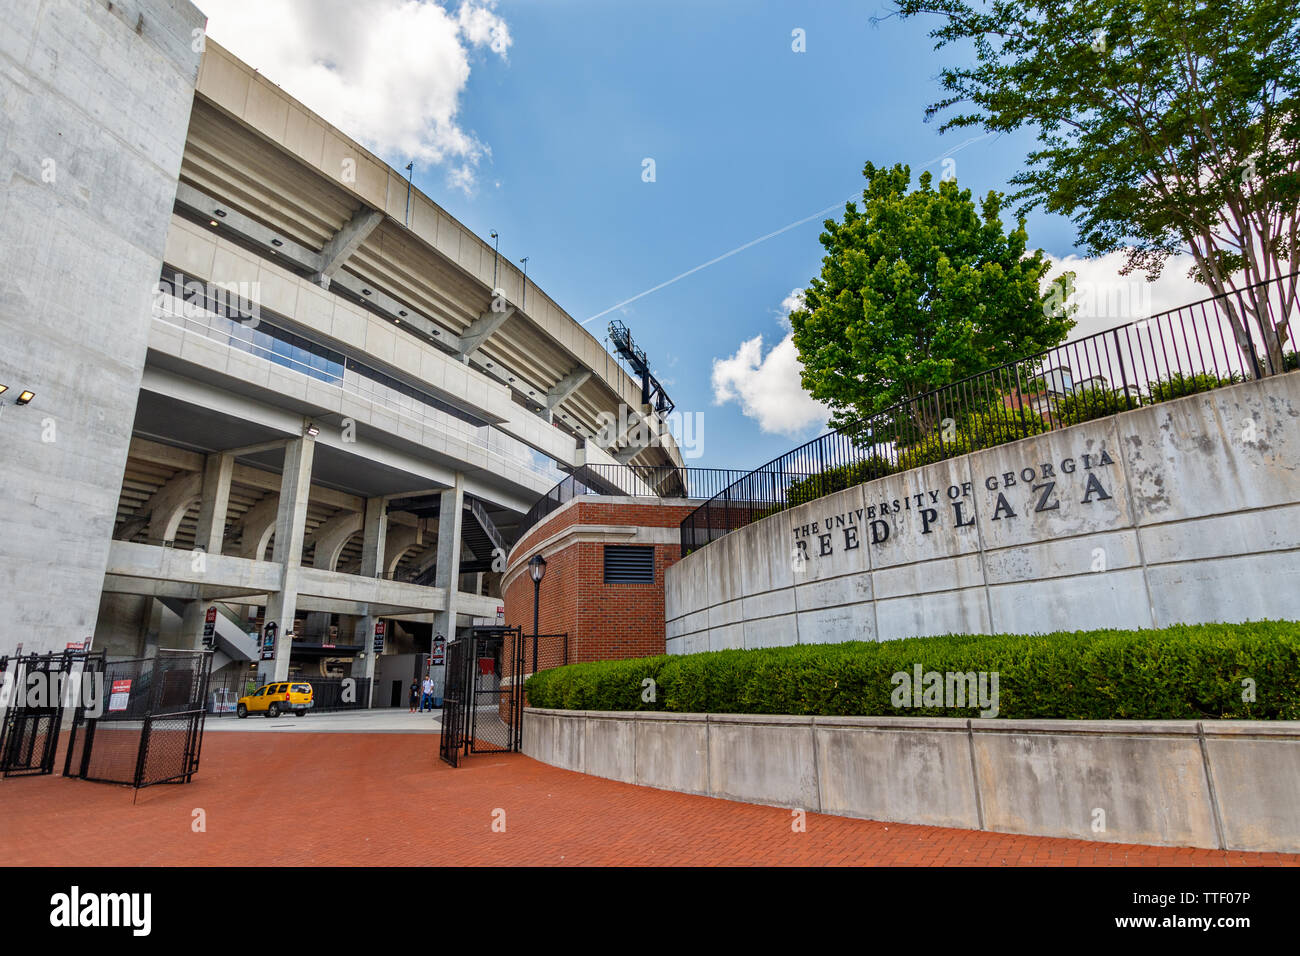 ATHENS, GA, USA - 3. Mai: Reed Plaza und Sanford Stadium am 3. Mai 2019 an der Universität von Georgia in Athens, Georgia. Stockfoto